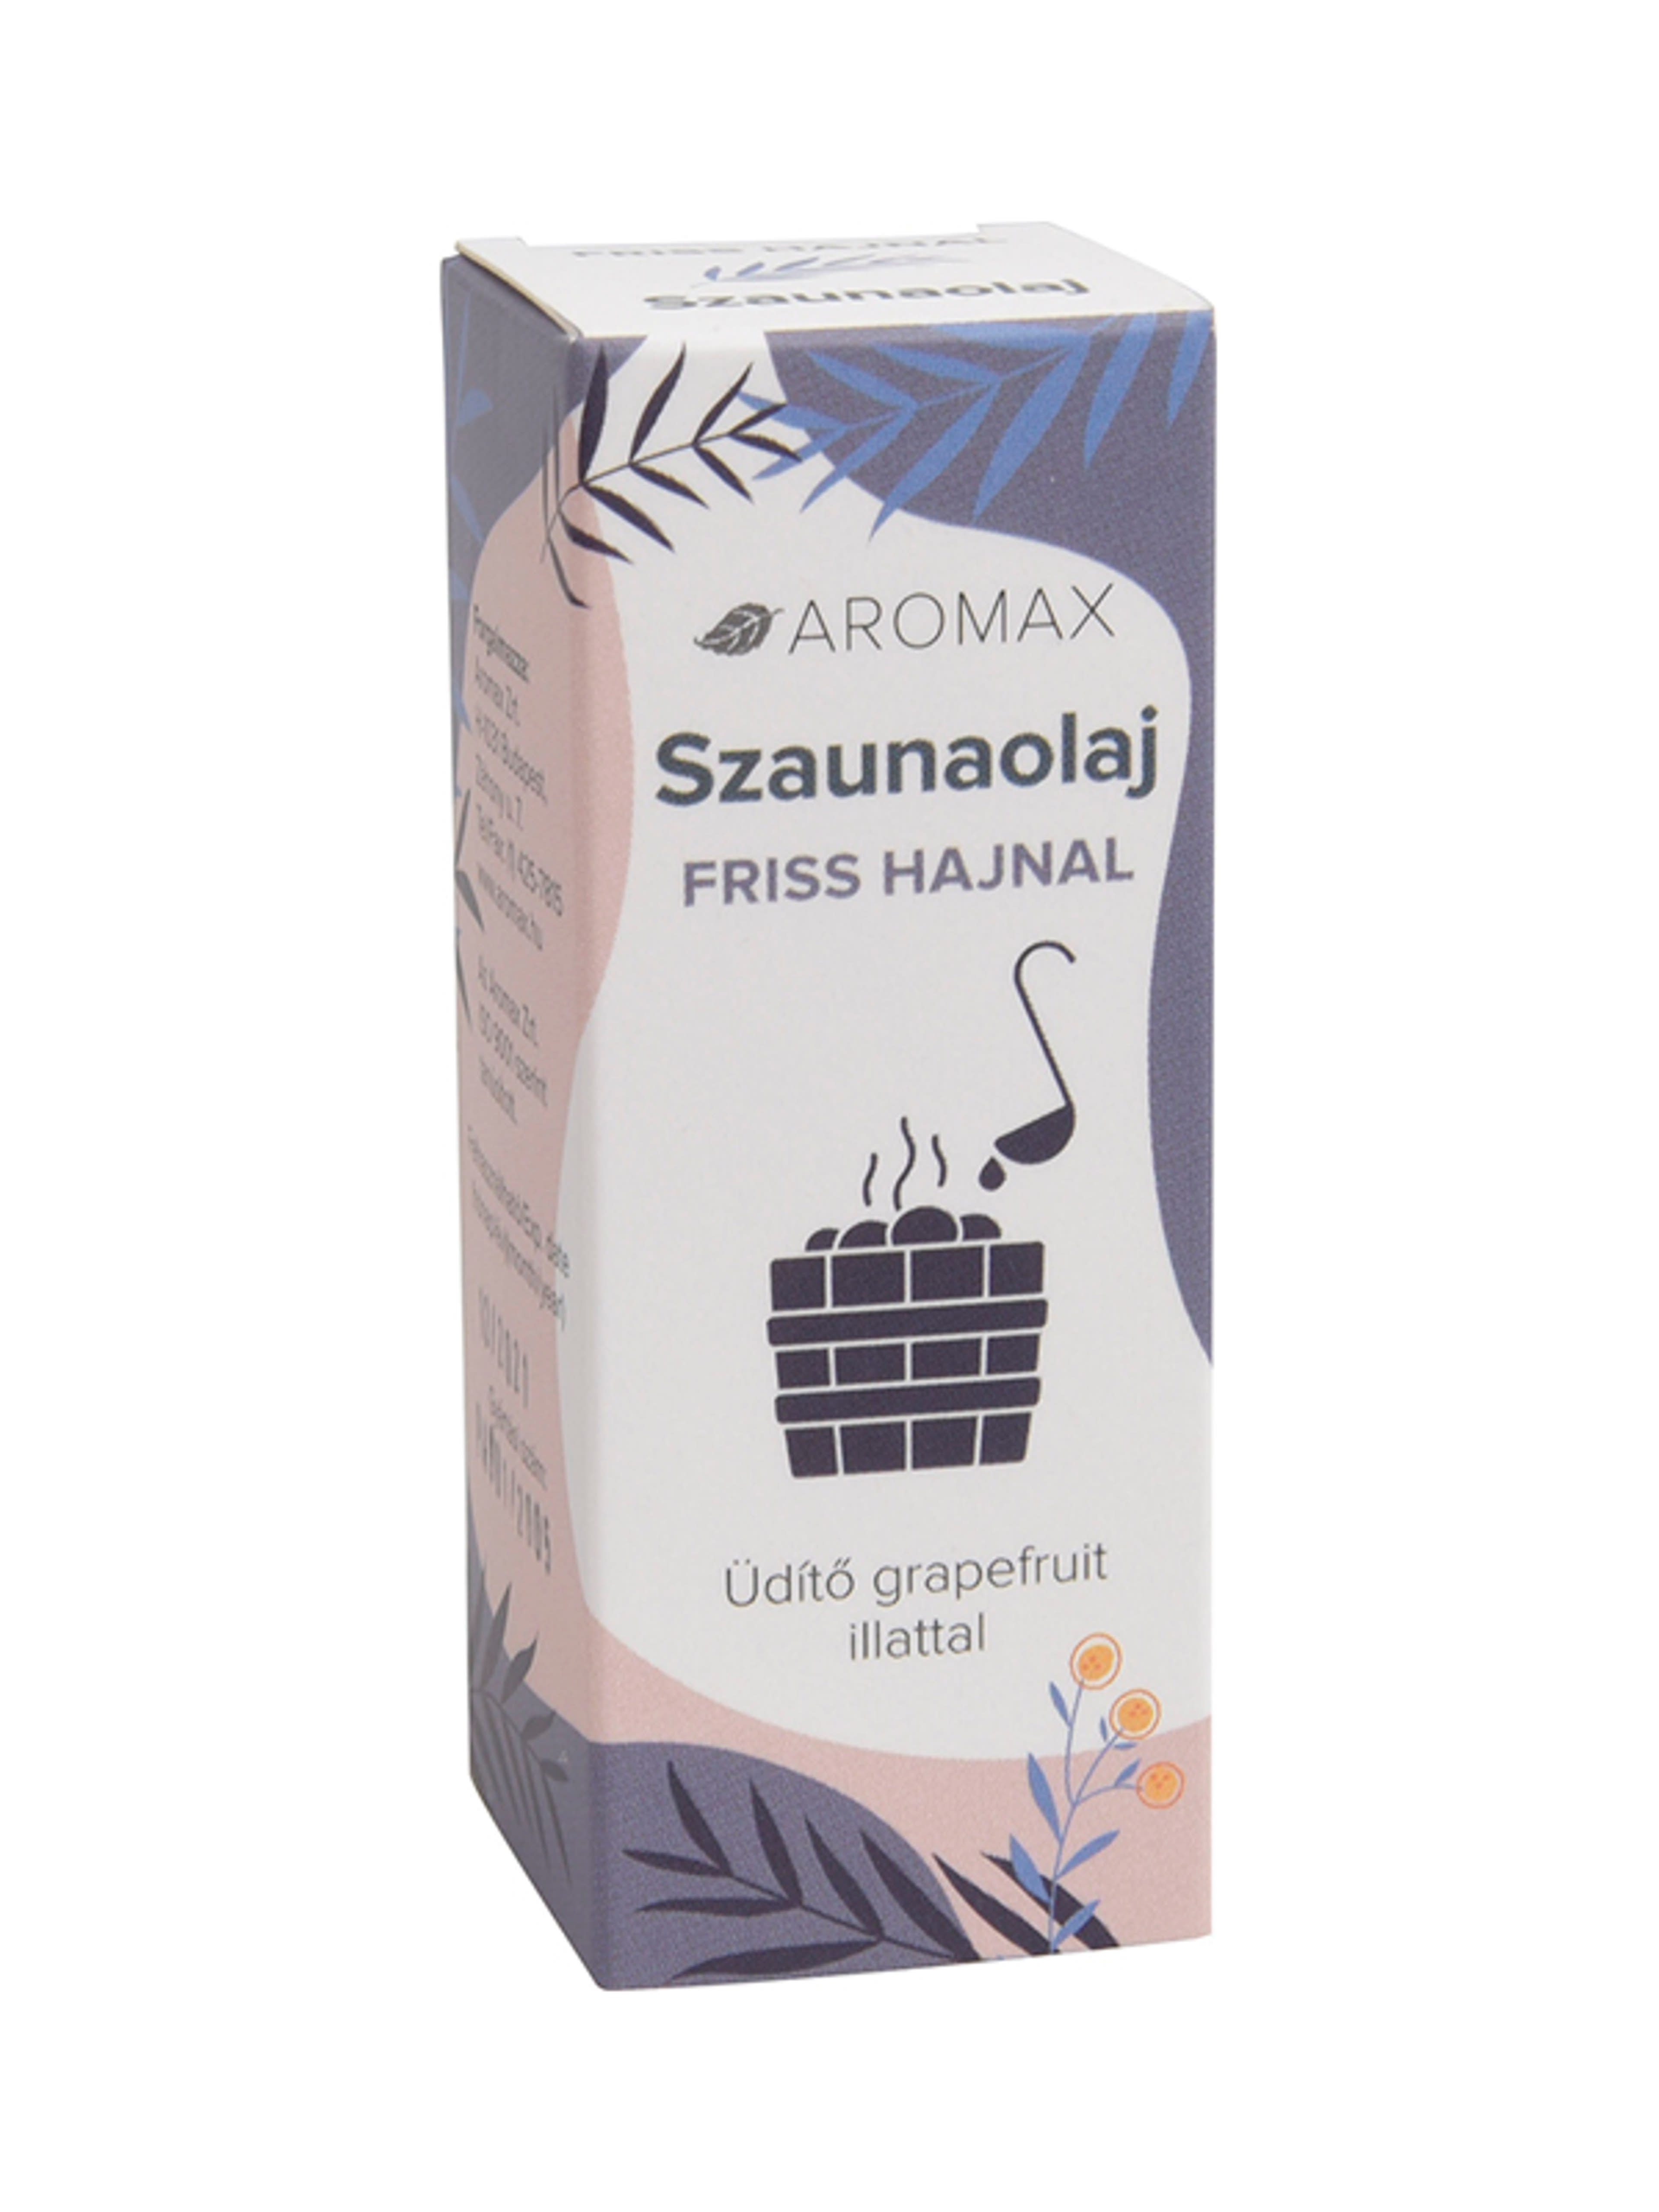 Aromax szaunaolaj friss hajnal - 20 ml-1